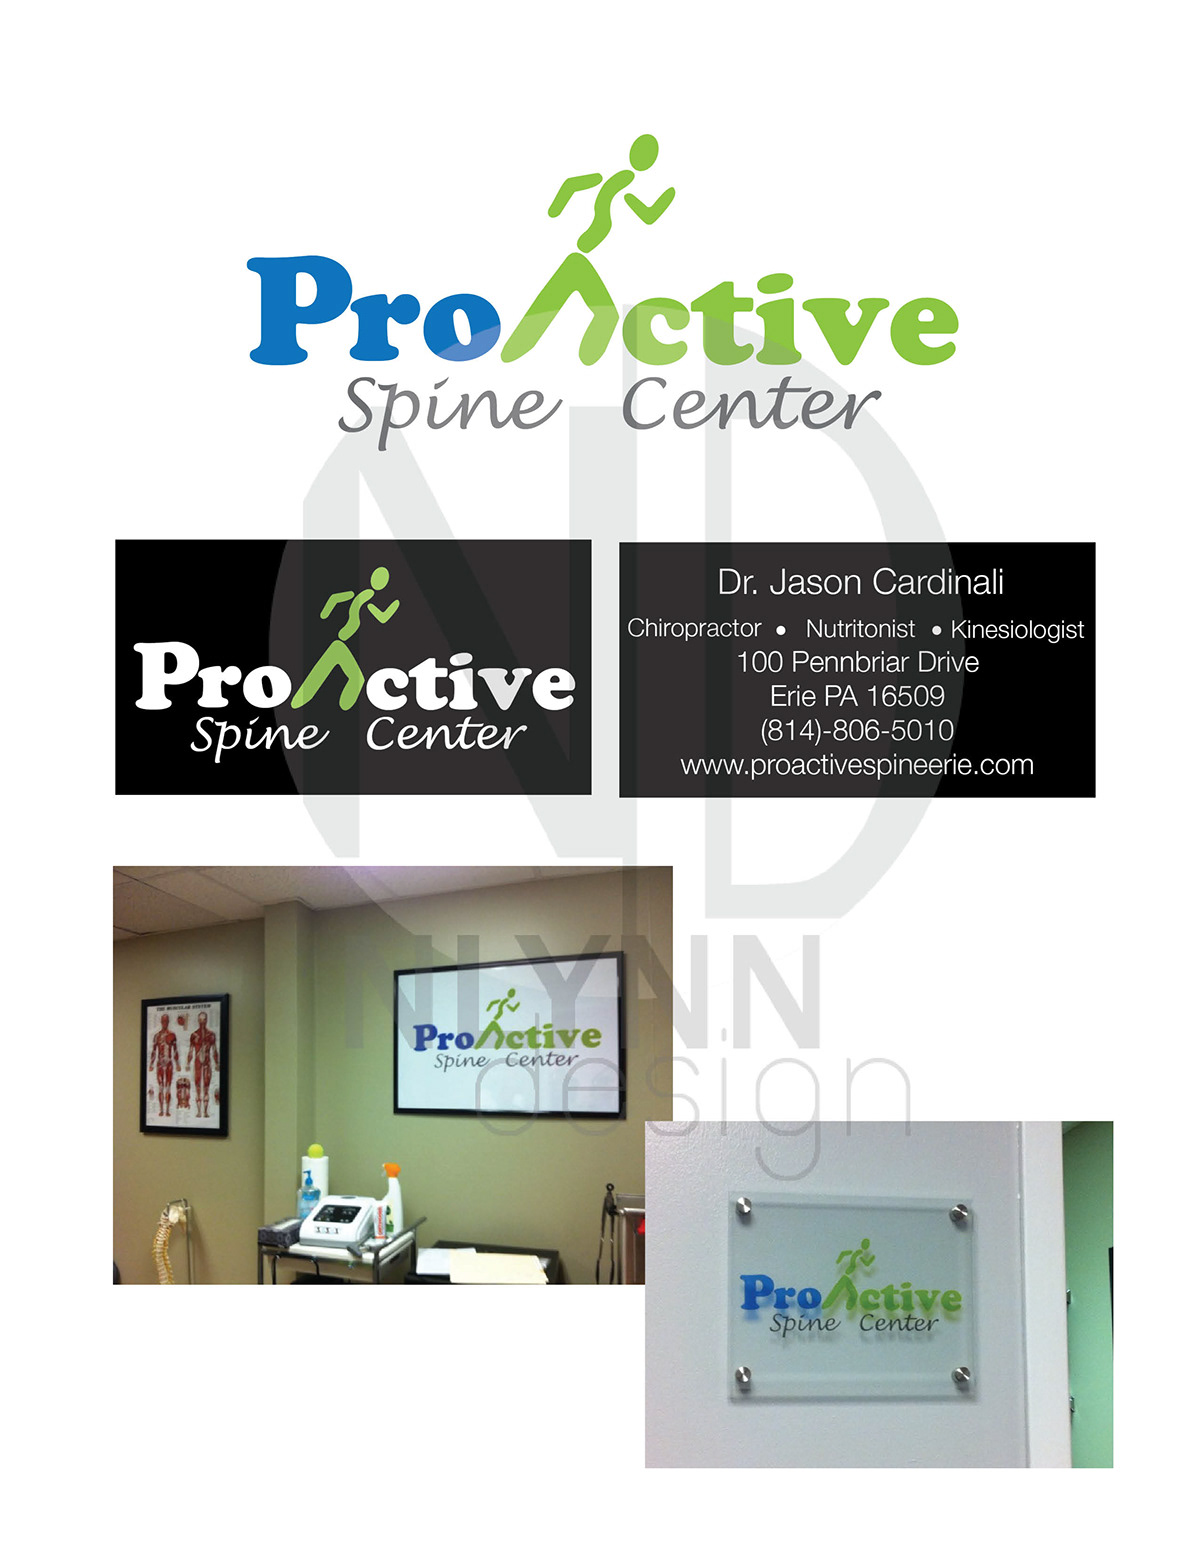 Chiropractic chiropractor spine center logo business card